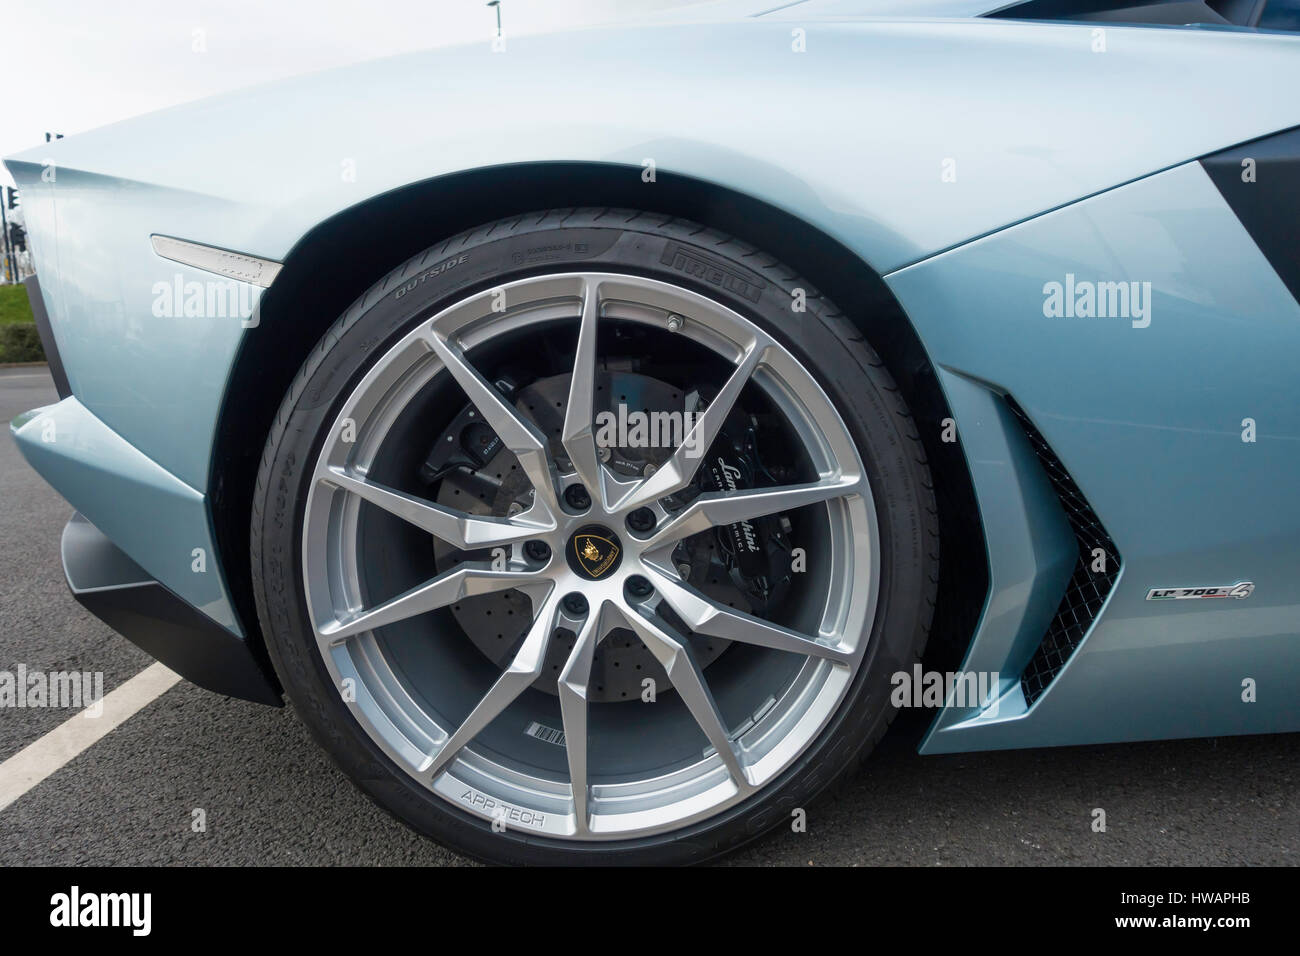 Lamborghini LR-700-4 Sports car detail showing ten spoked alloy wheel and disc brake calipers. Stock Photo